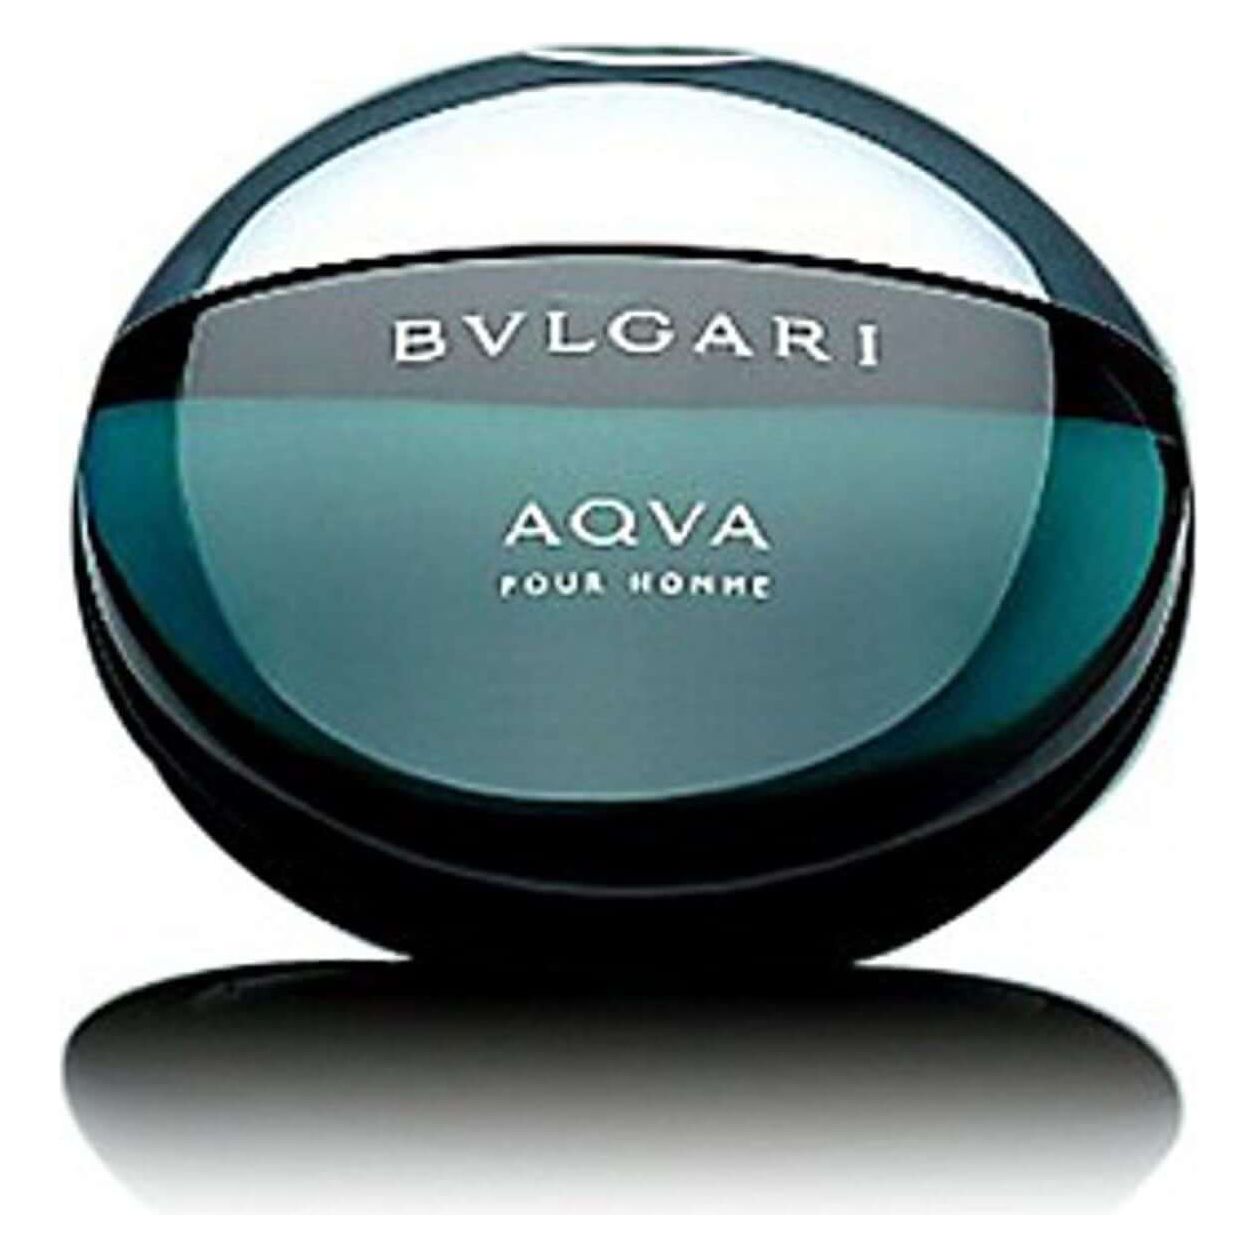 Bvlgari Aqua Cologne by Bvlgari 3.3 / 3.4 oz Tester for Men